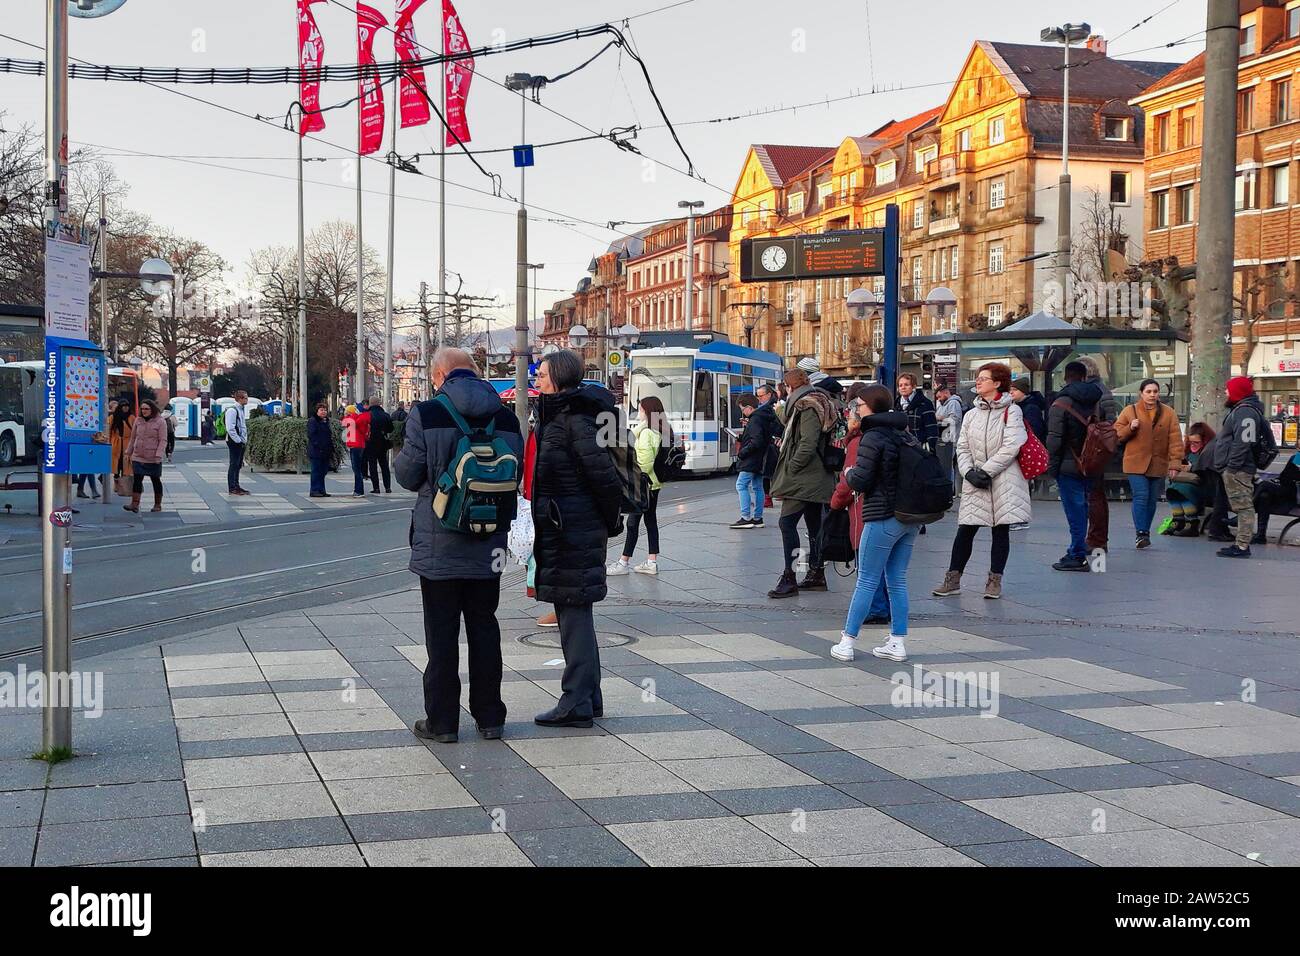 People waiting at rainway and bus public transportation stop at 'Bismarkplatz' in Heidelberg, Germany Stock Photo